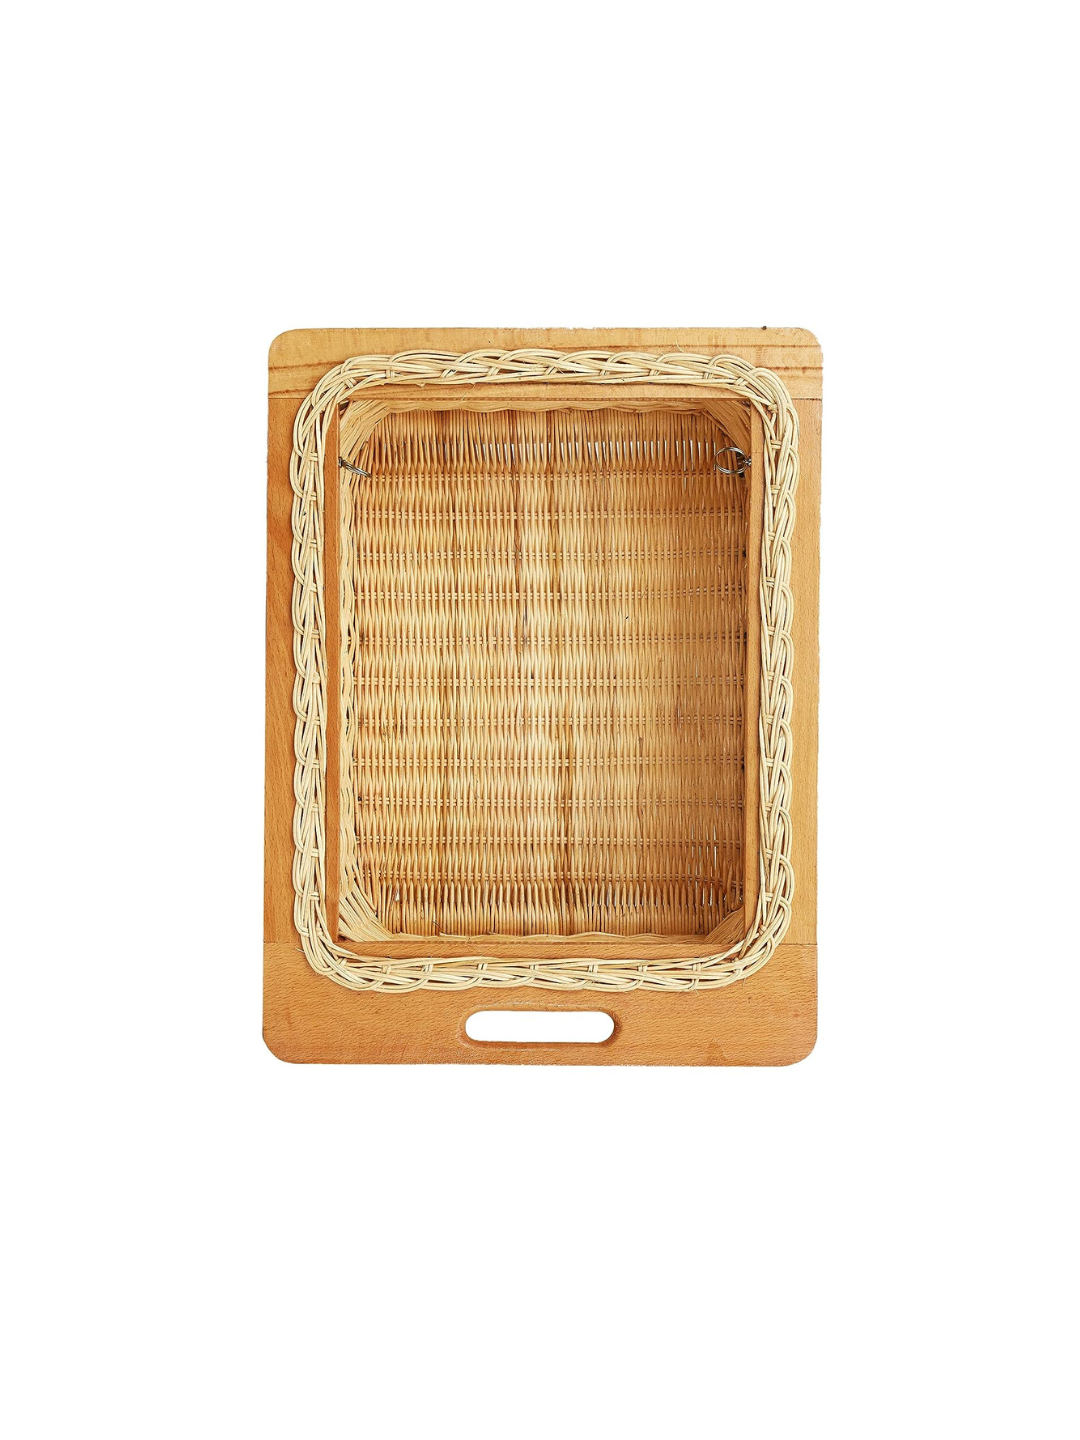 Wicker Basket for Modular Kitchen | Pull Out Basket 20 x 18 x 8 - Sarvani - Akway